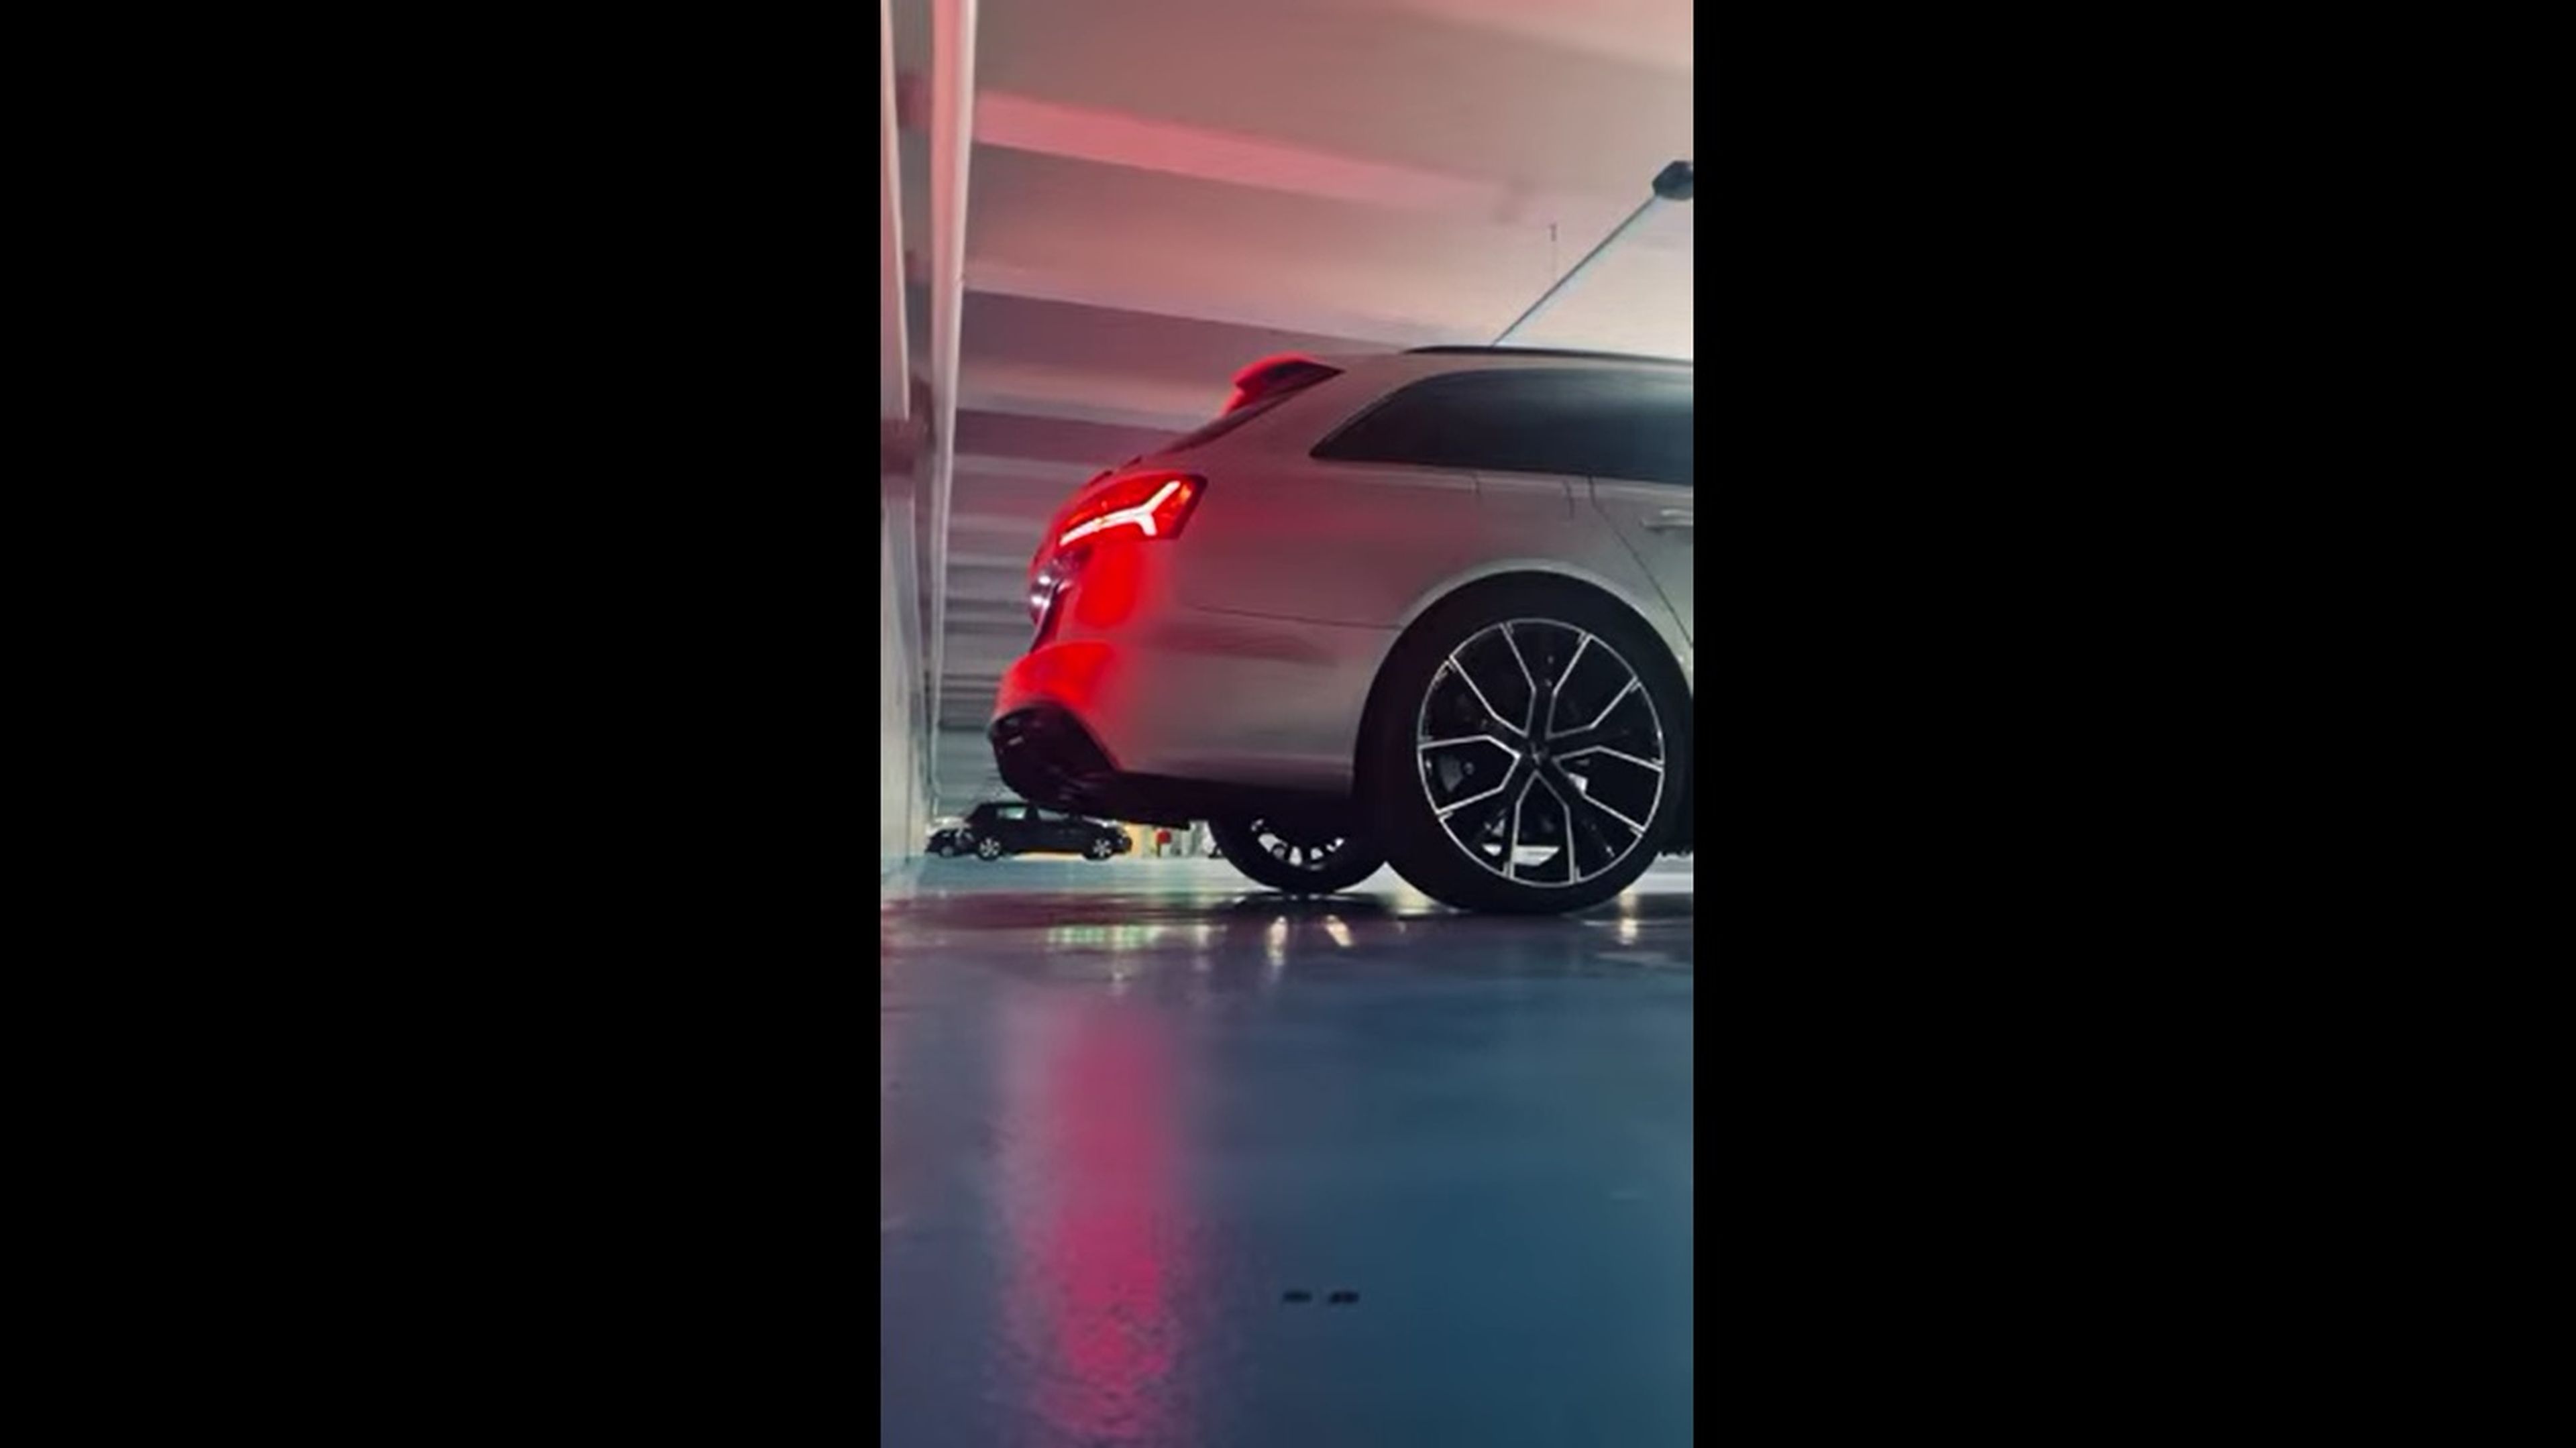 VÍDEO: ¡Se avecina tormenta! Este Audi RS 6 Avant acaba de arrancar…